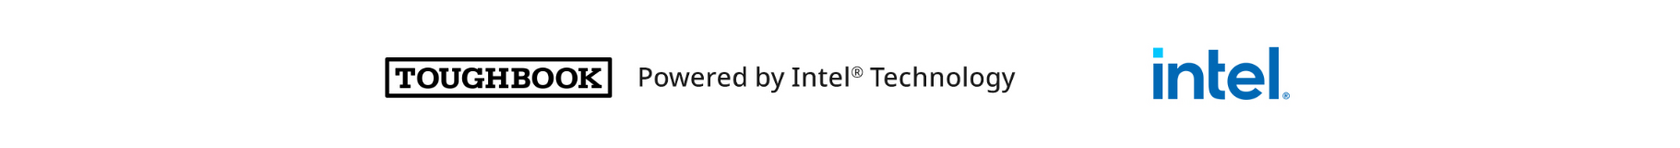 Toughbook and Intel partner logos